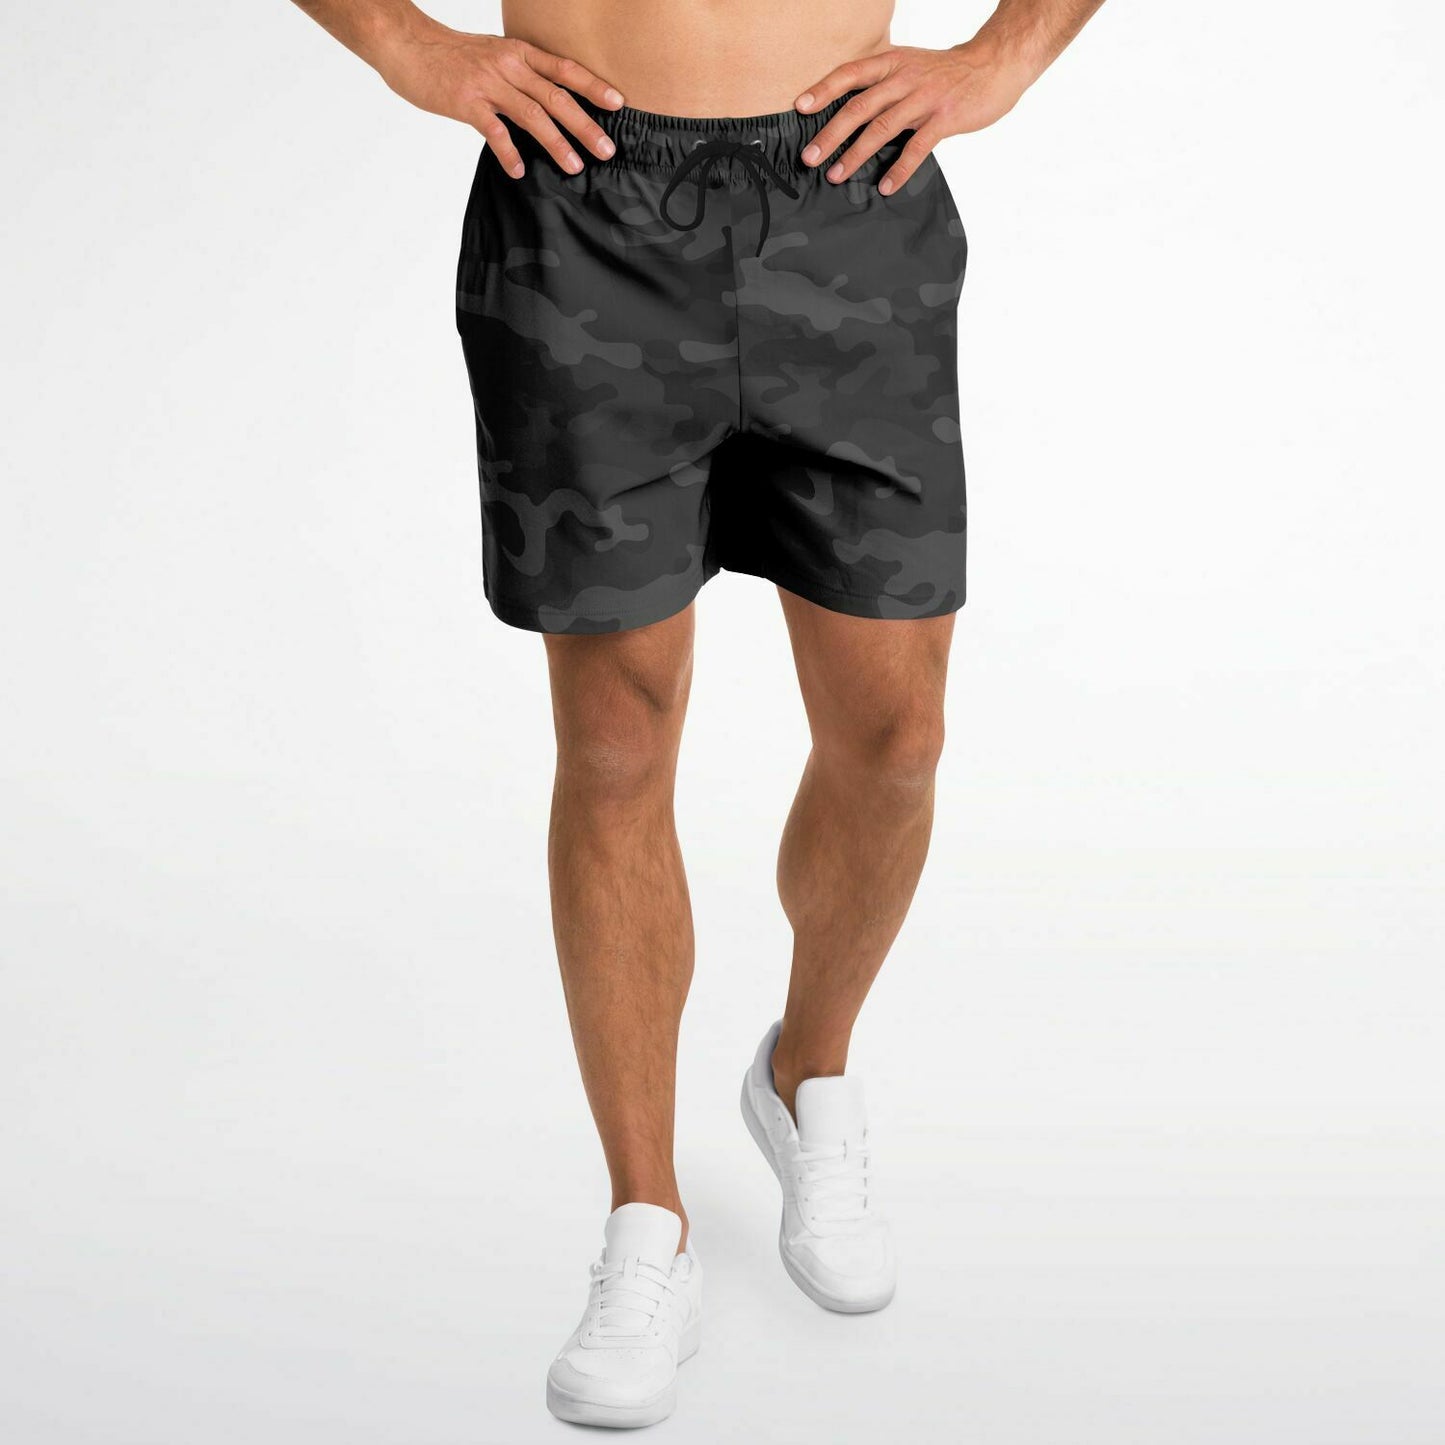 Dynem Athletic Shorts in Dark Gray Camouflage